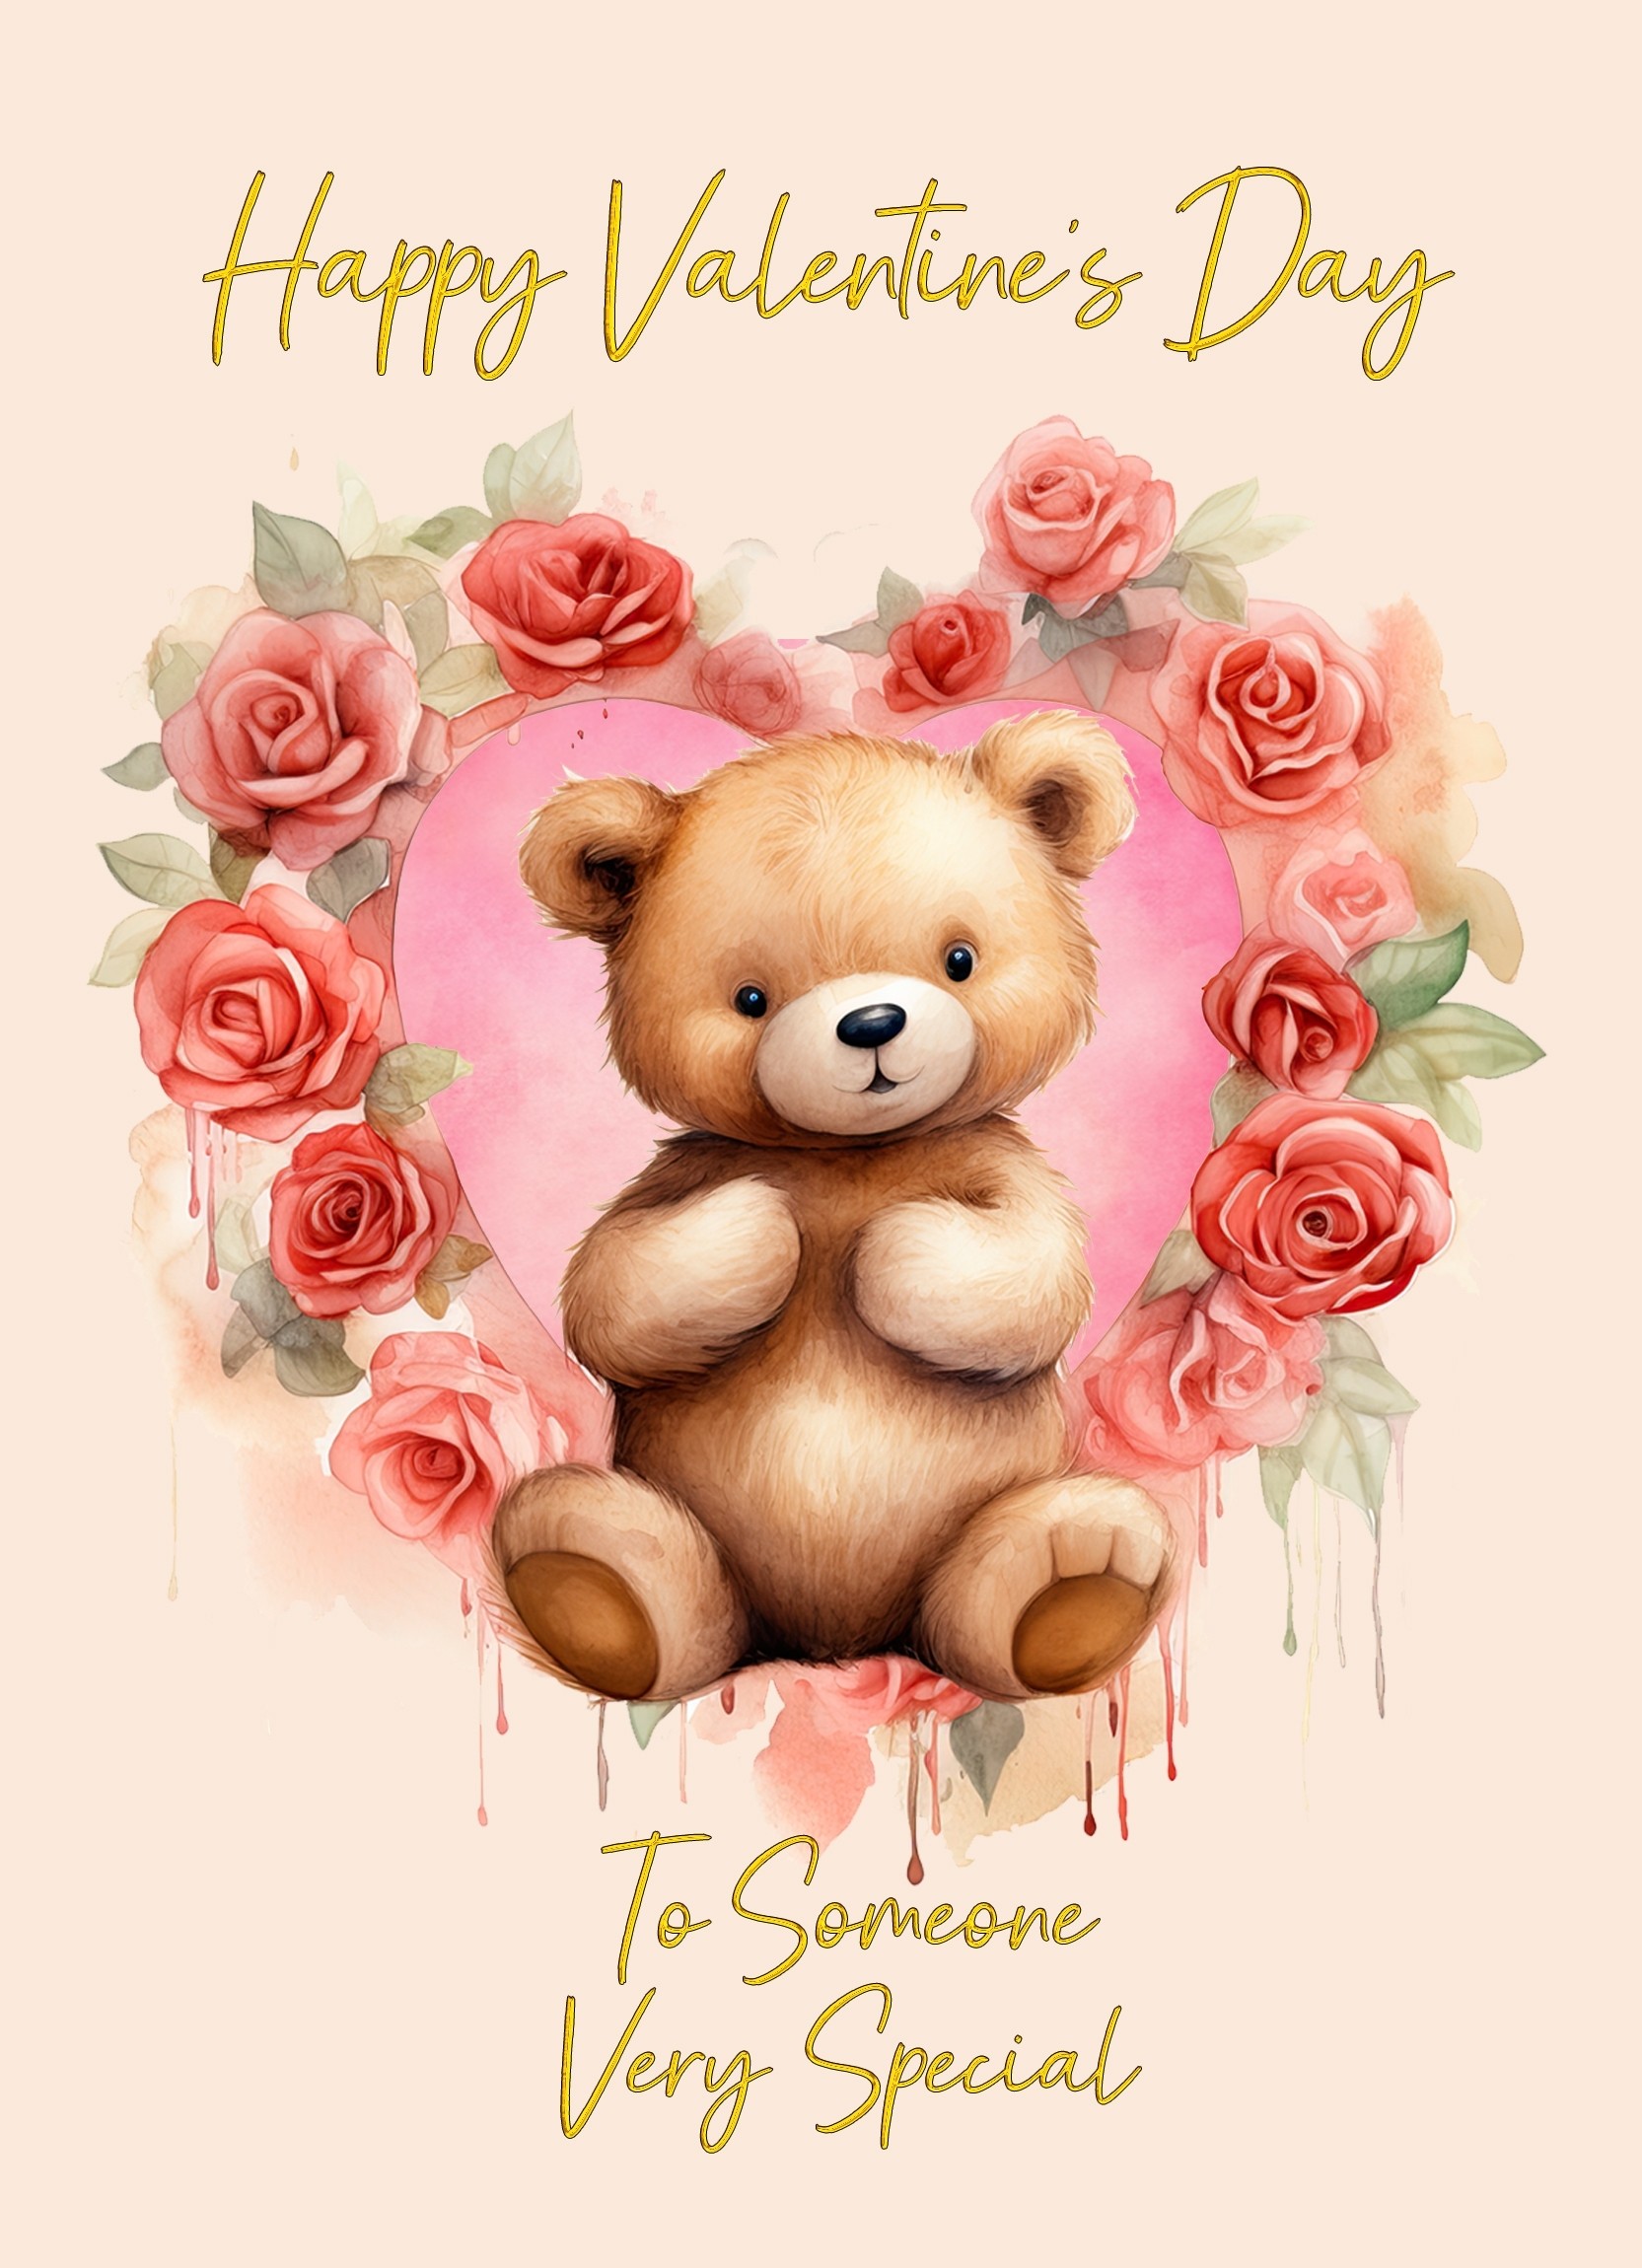 Valentines Day Card for Wonderful Someone (Cuddly Bear, Design 2)